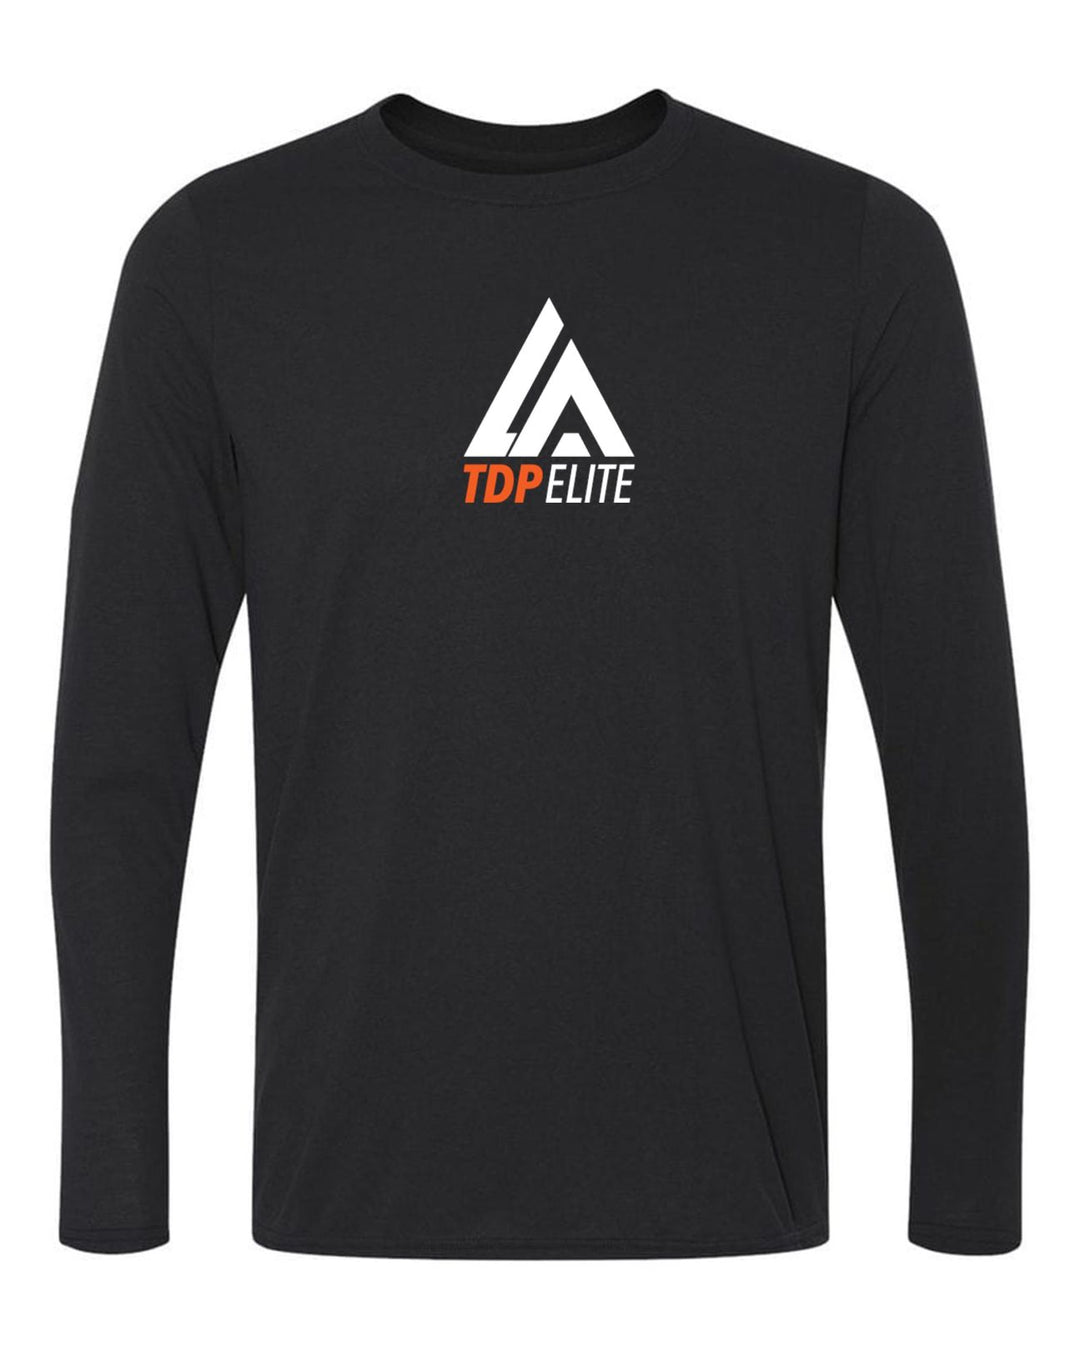 LATDP Elite Long-Sleeve T-Shirt LATDP Spiritwear BLACK MENS SMALL - Third Coast Soccer